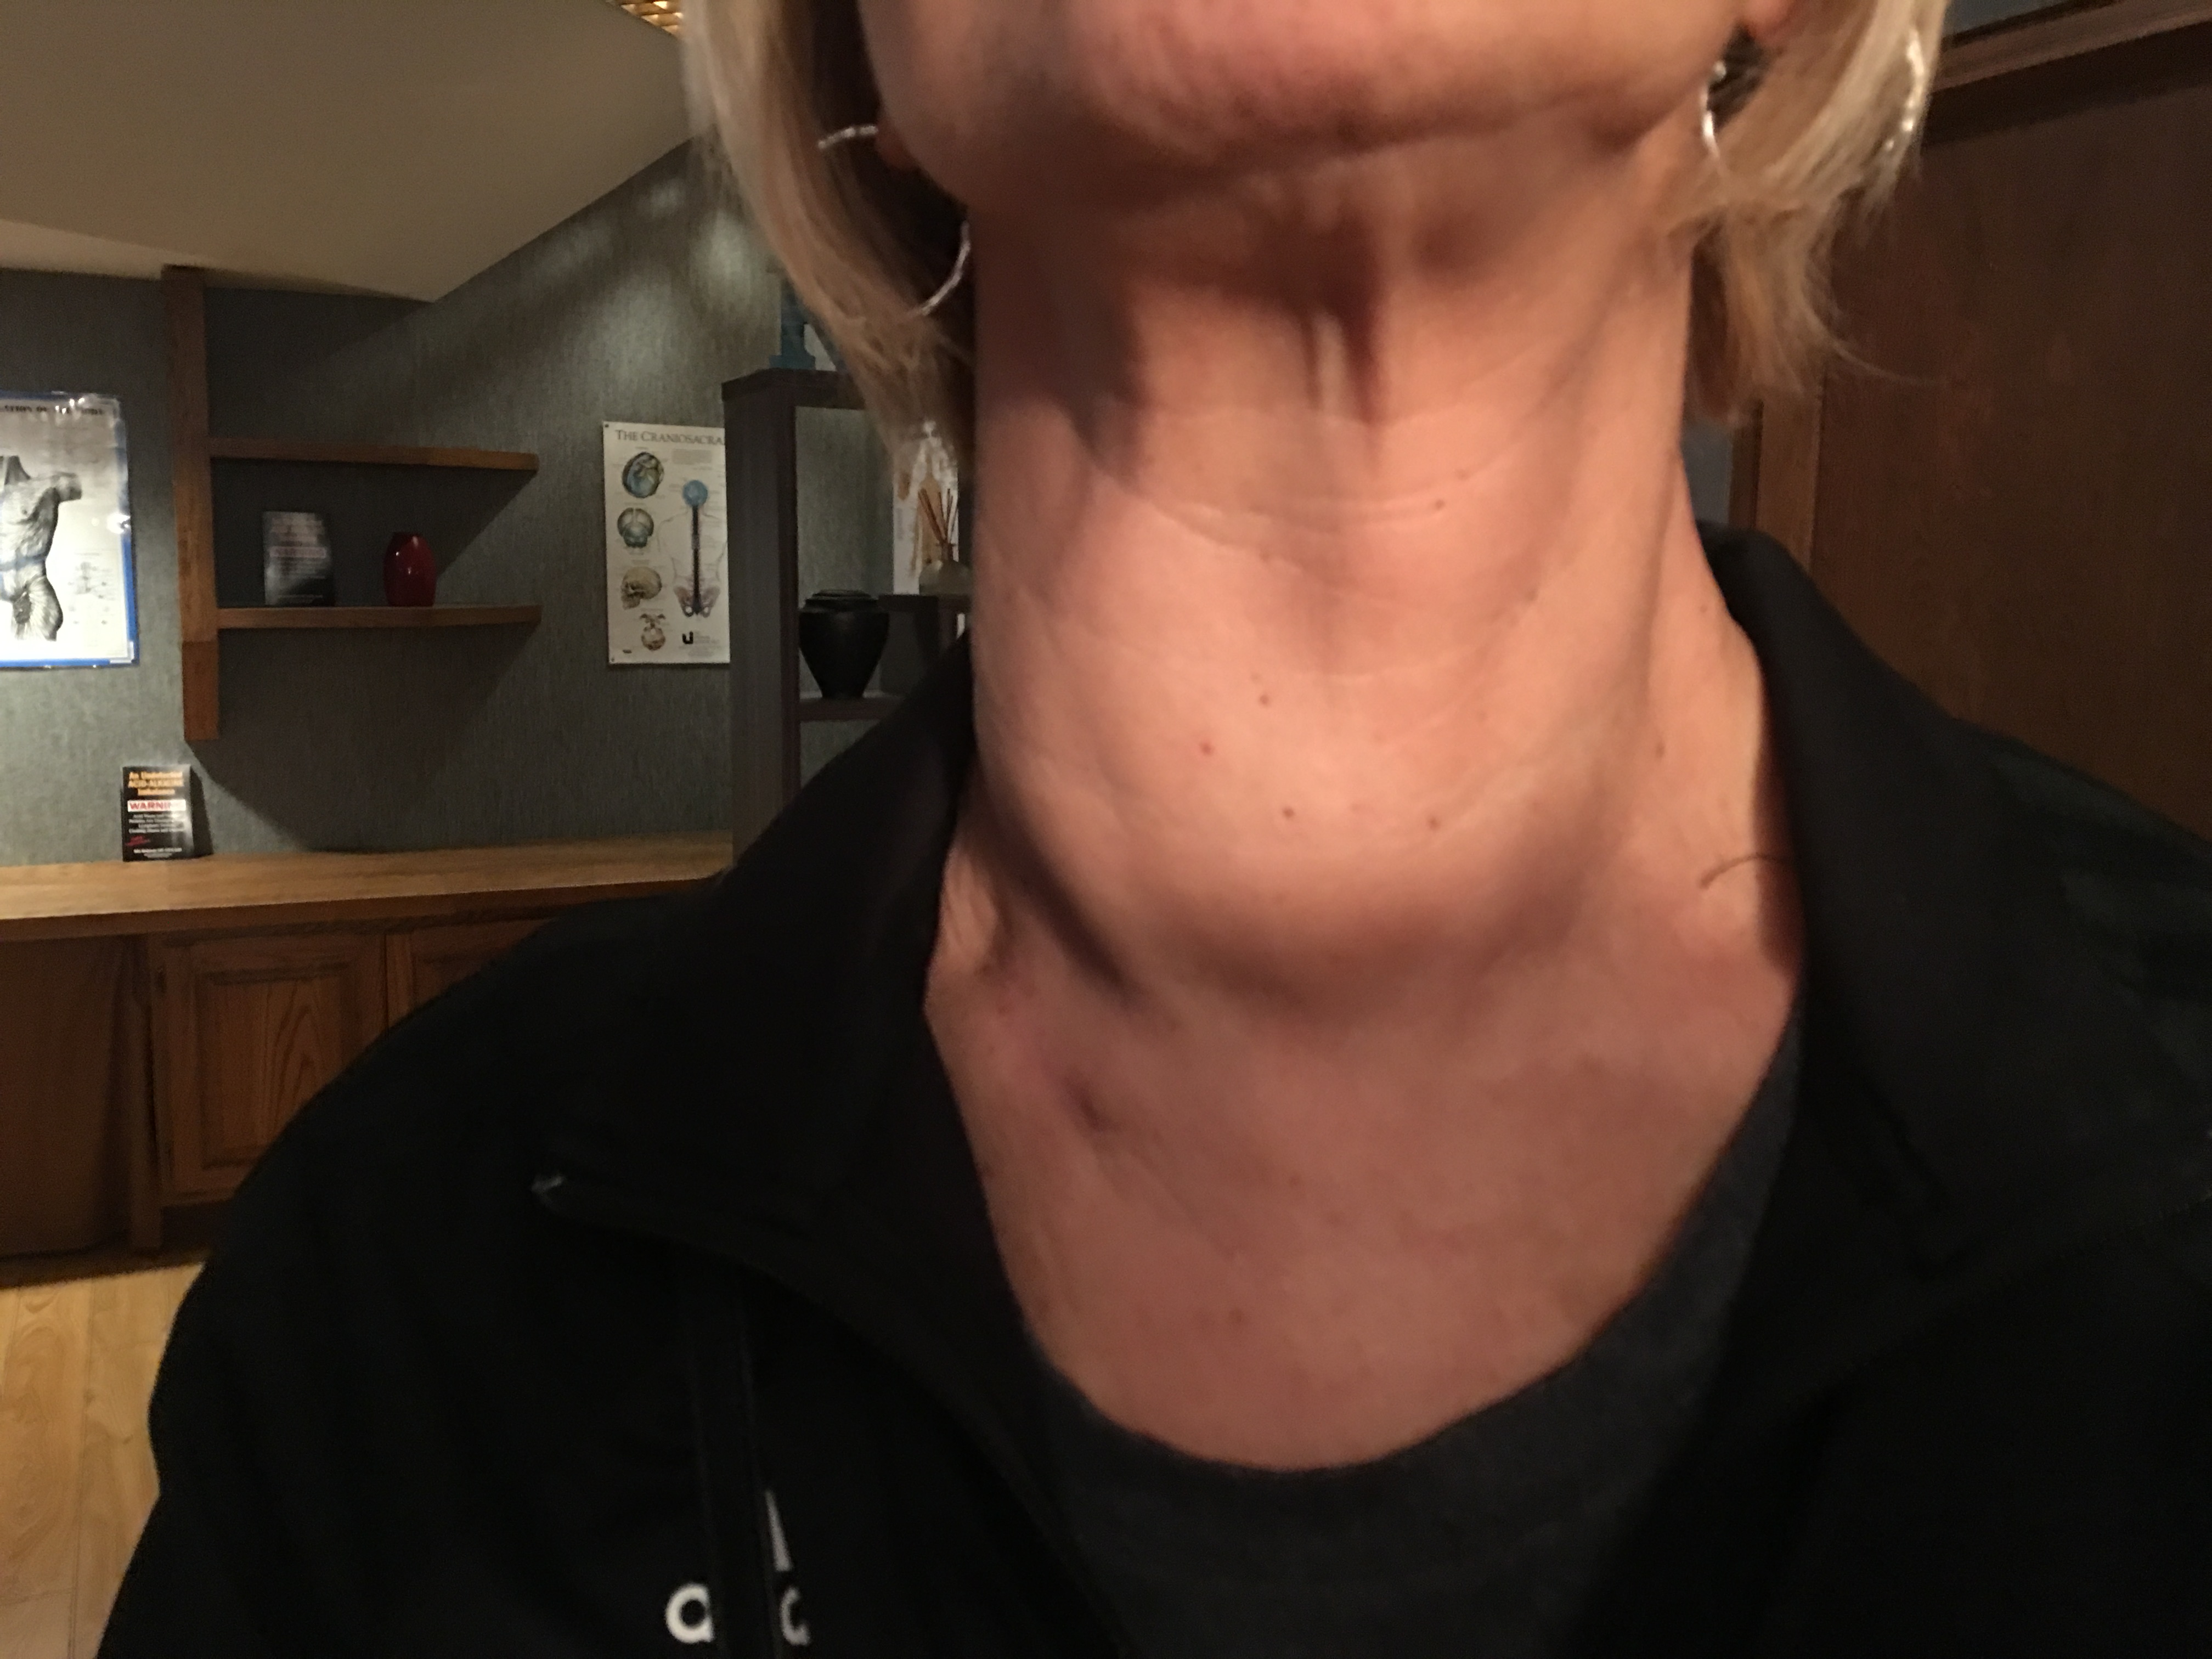 lymph nodes on back of neck swollen